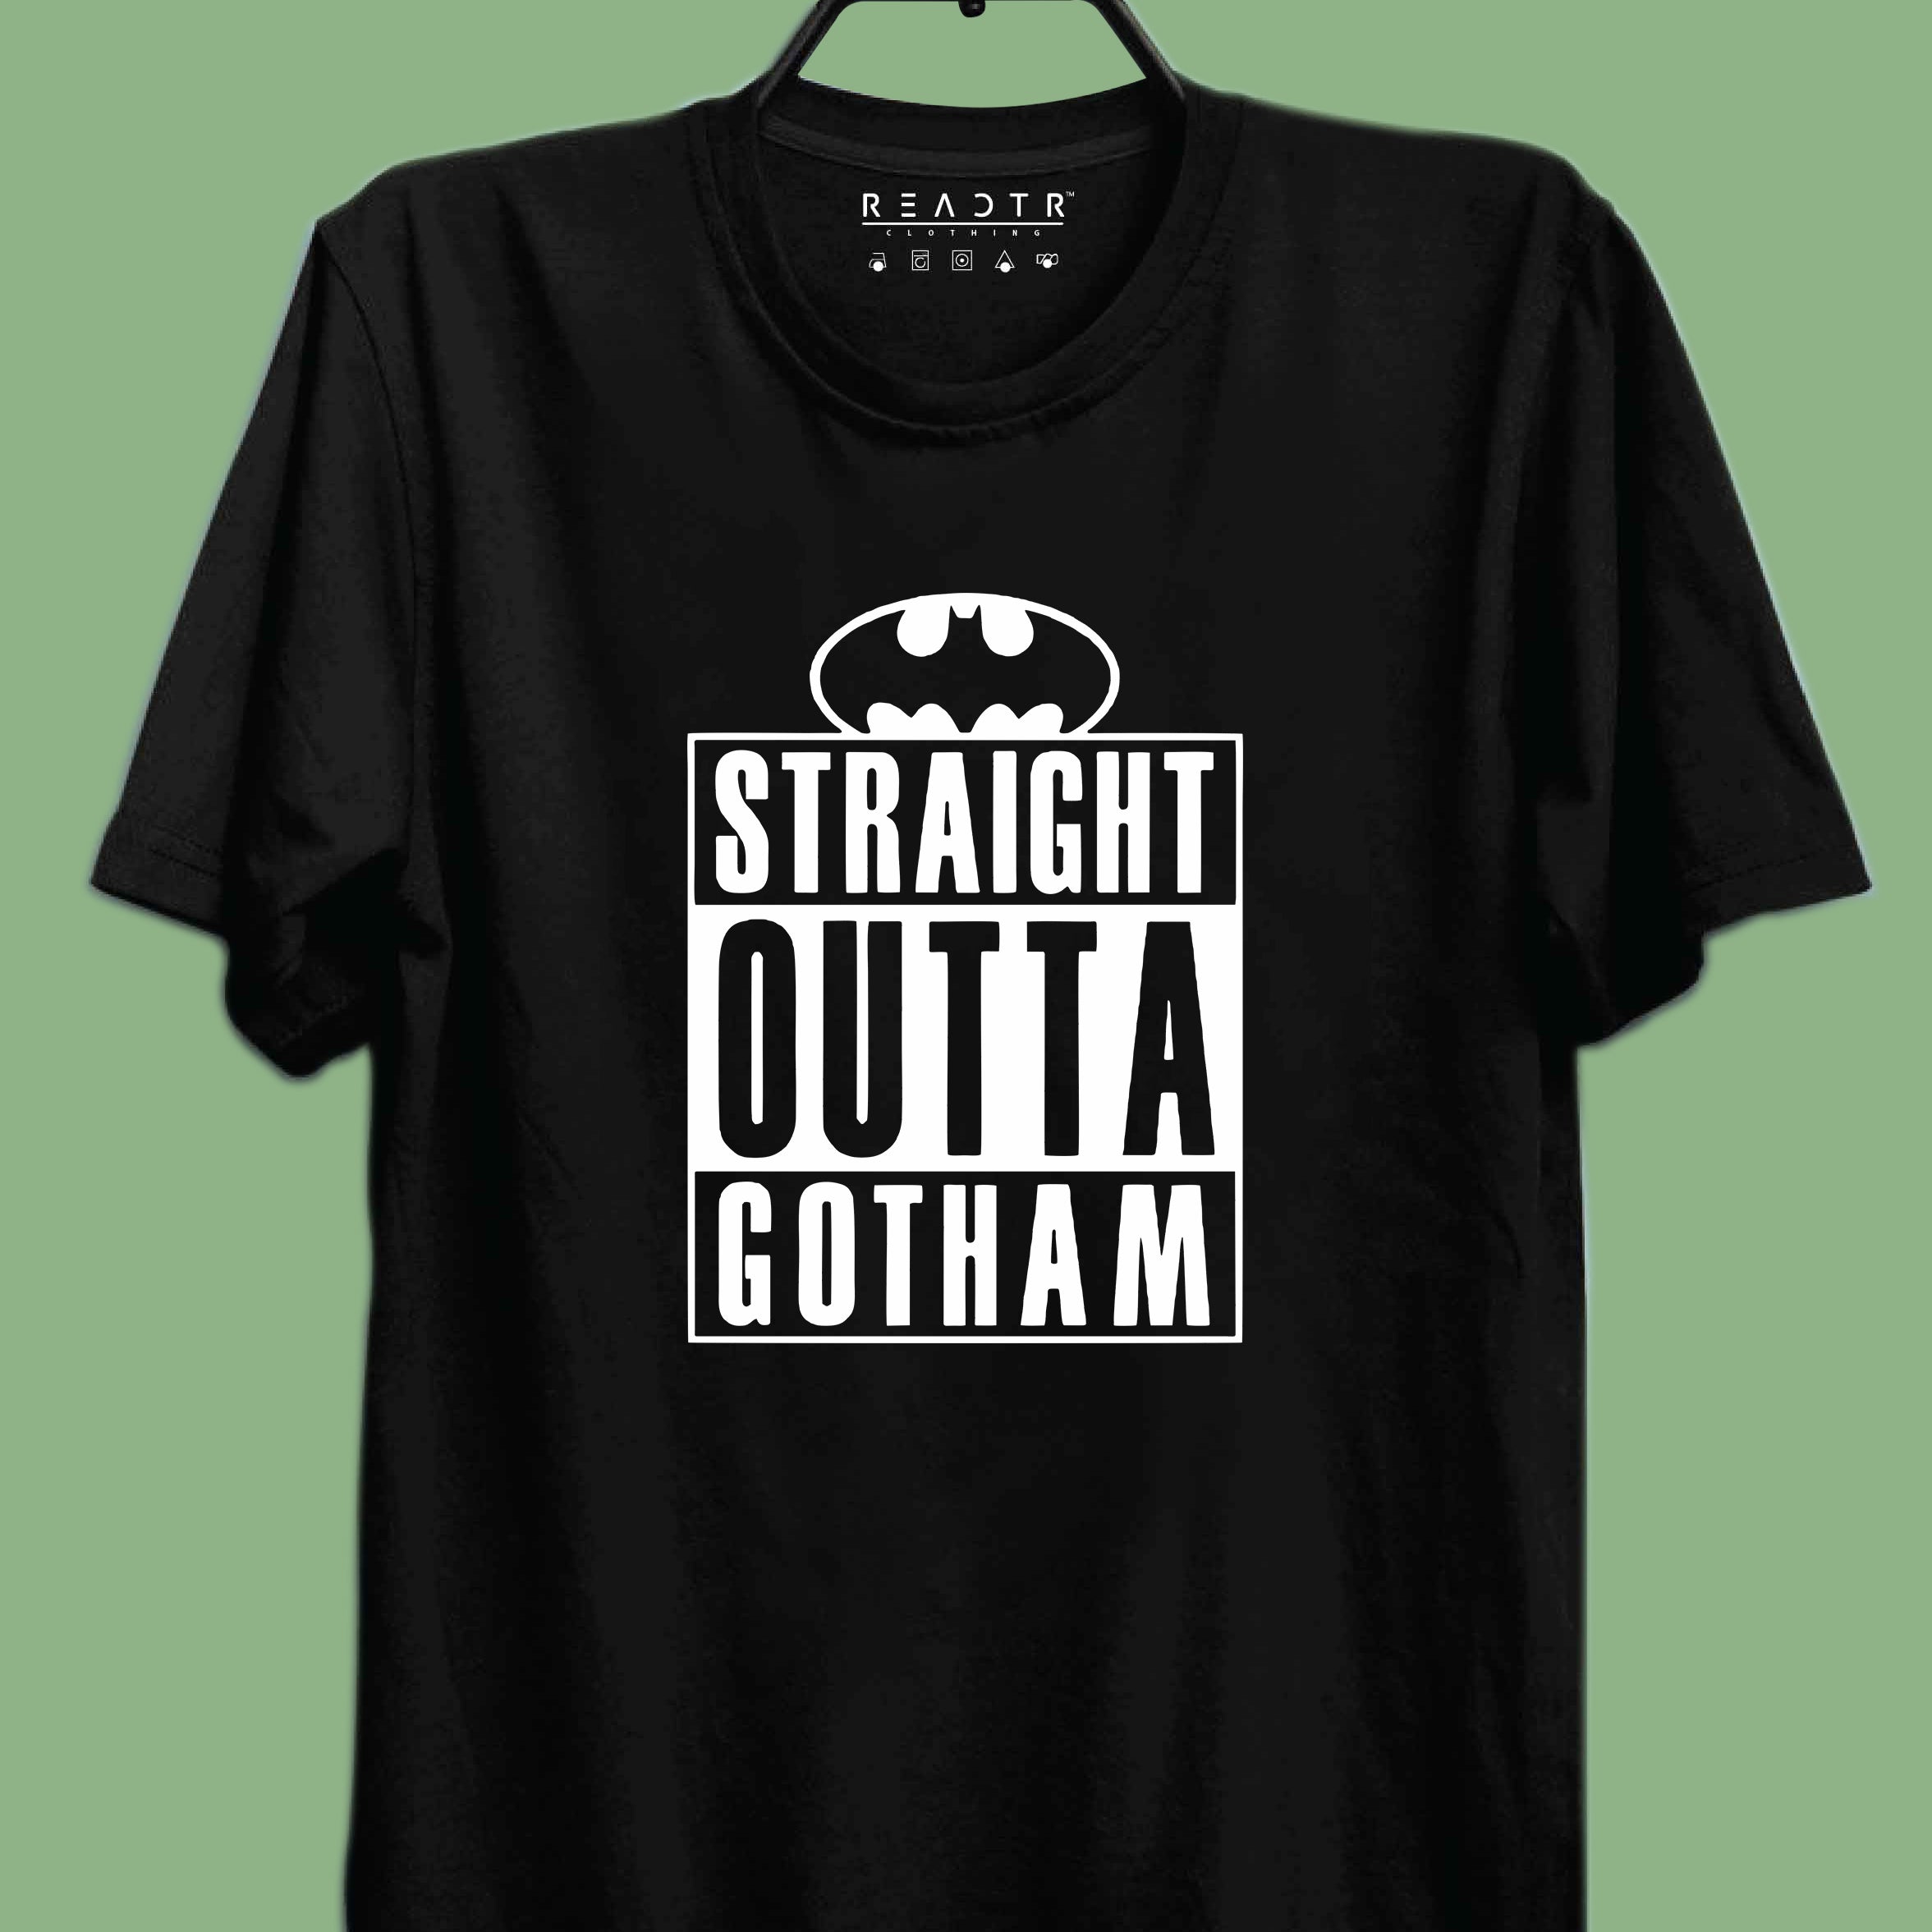 Straight Outta Gotham Reactr Tshirts For Men - Eyewearlabs